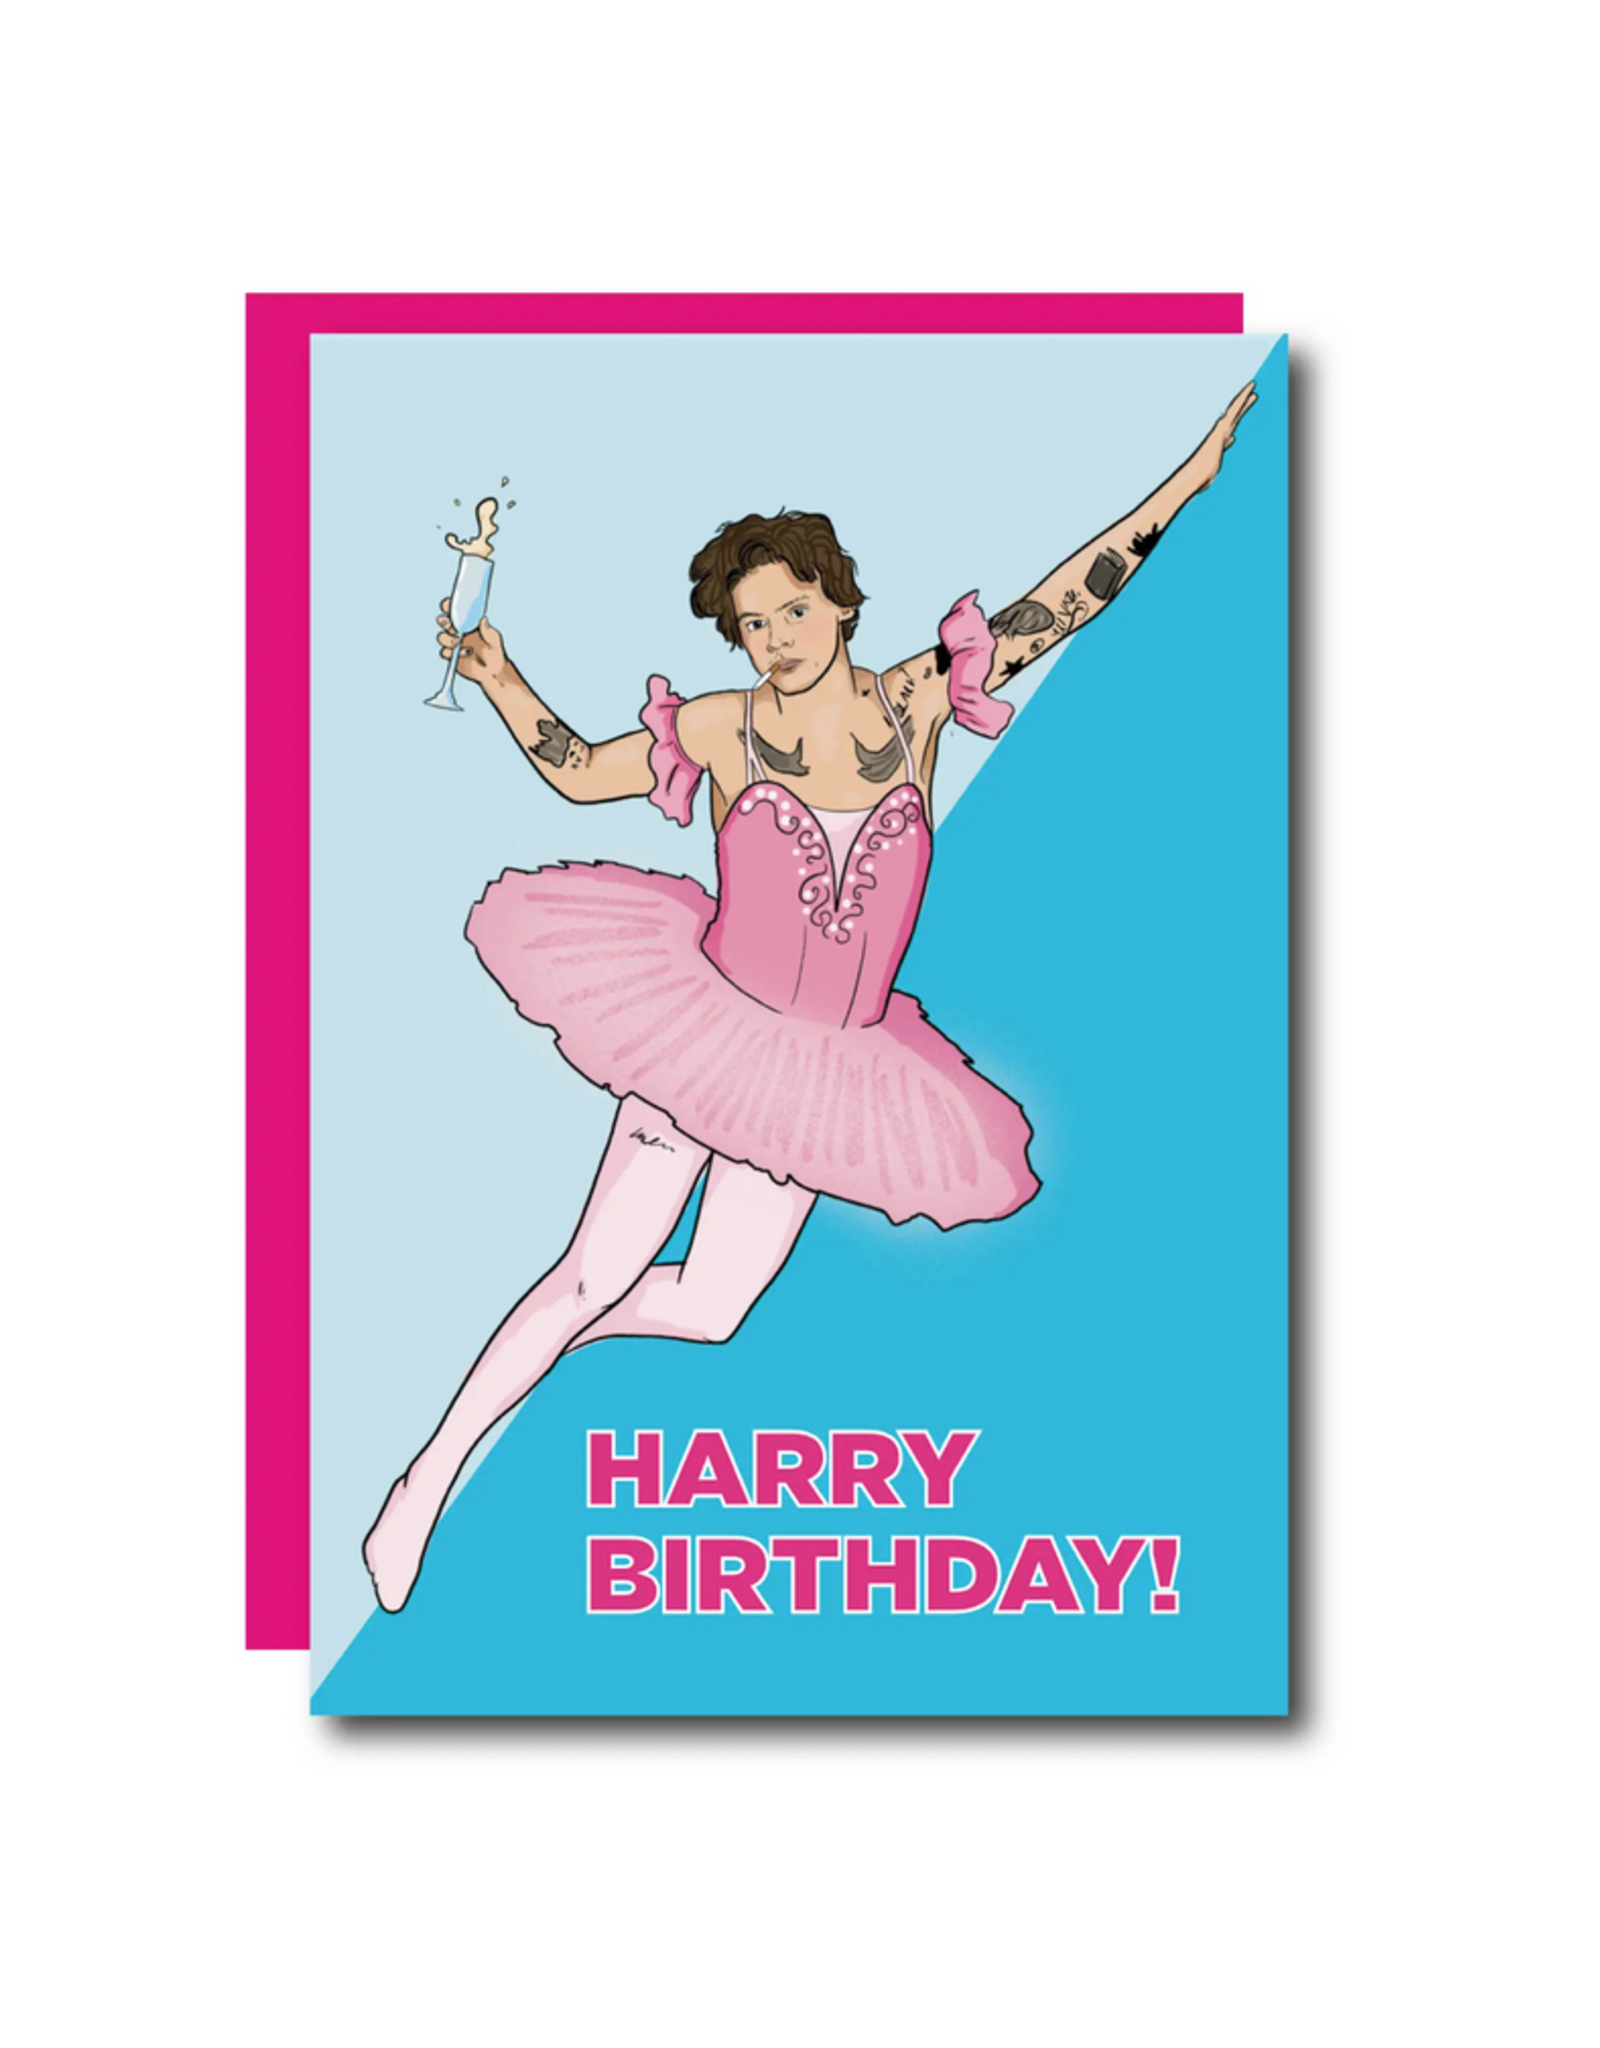 Harry Birthday Greeting Card